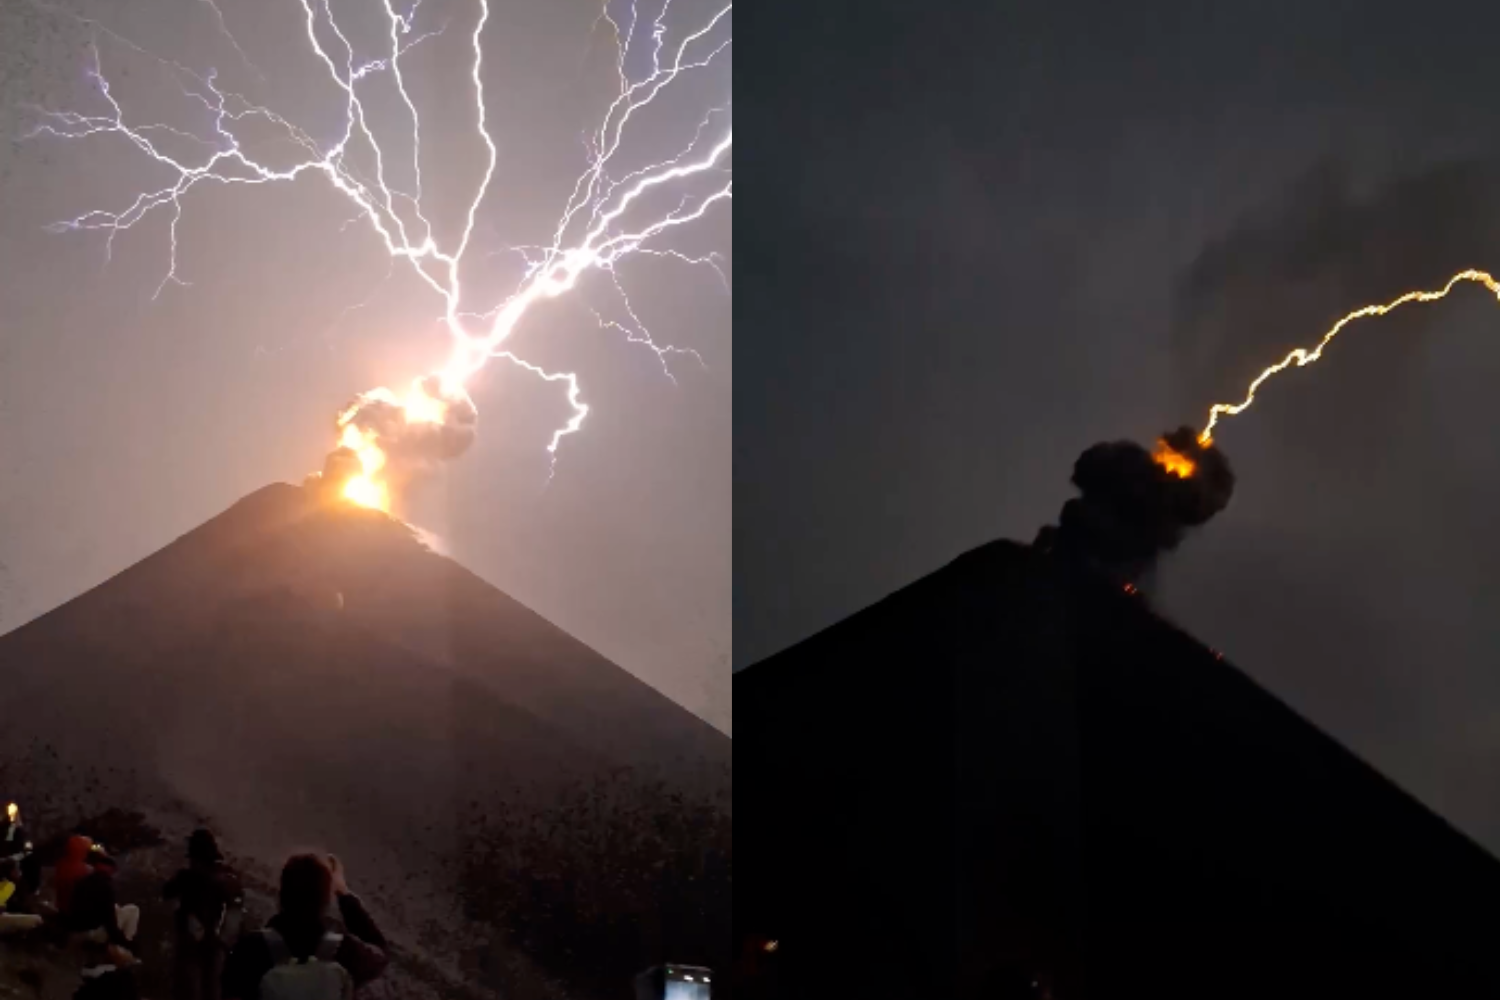 Lightning Dazzles Onlookers Watching the Eruption of Volcán de Fuego in Guatemala